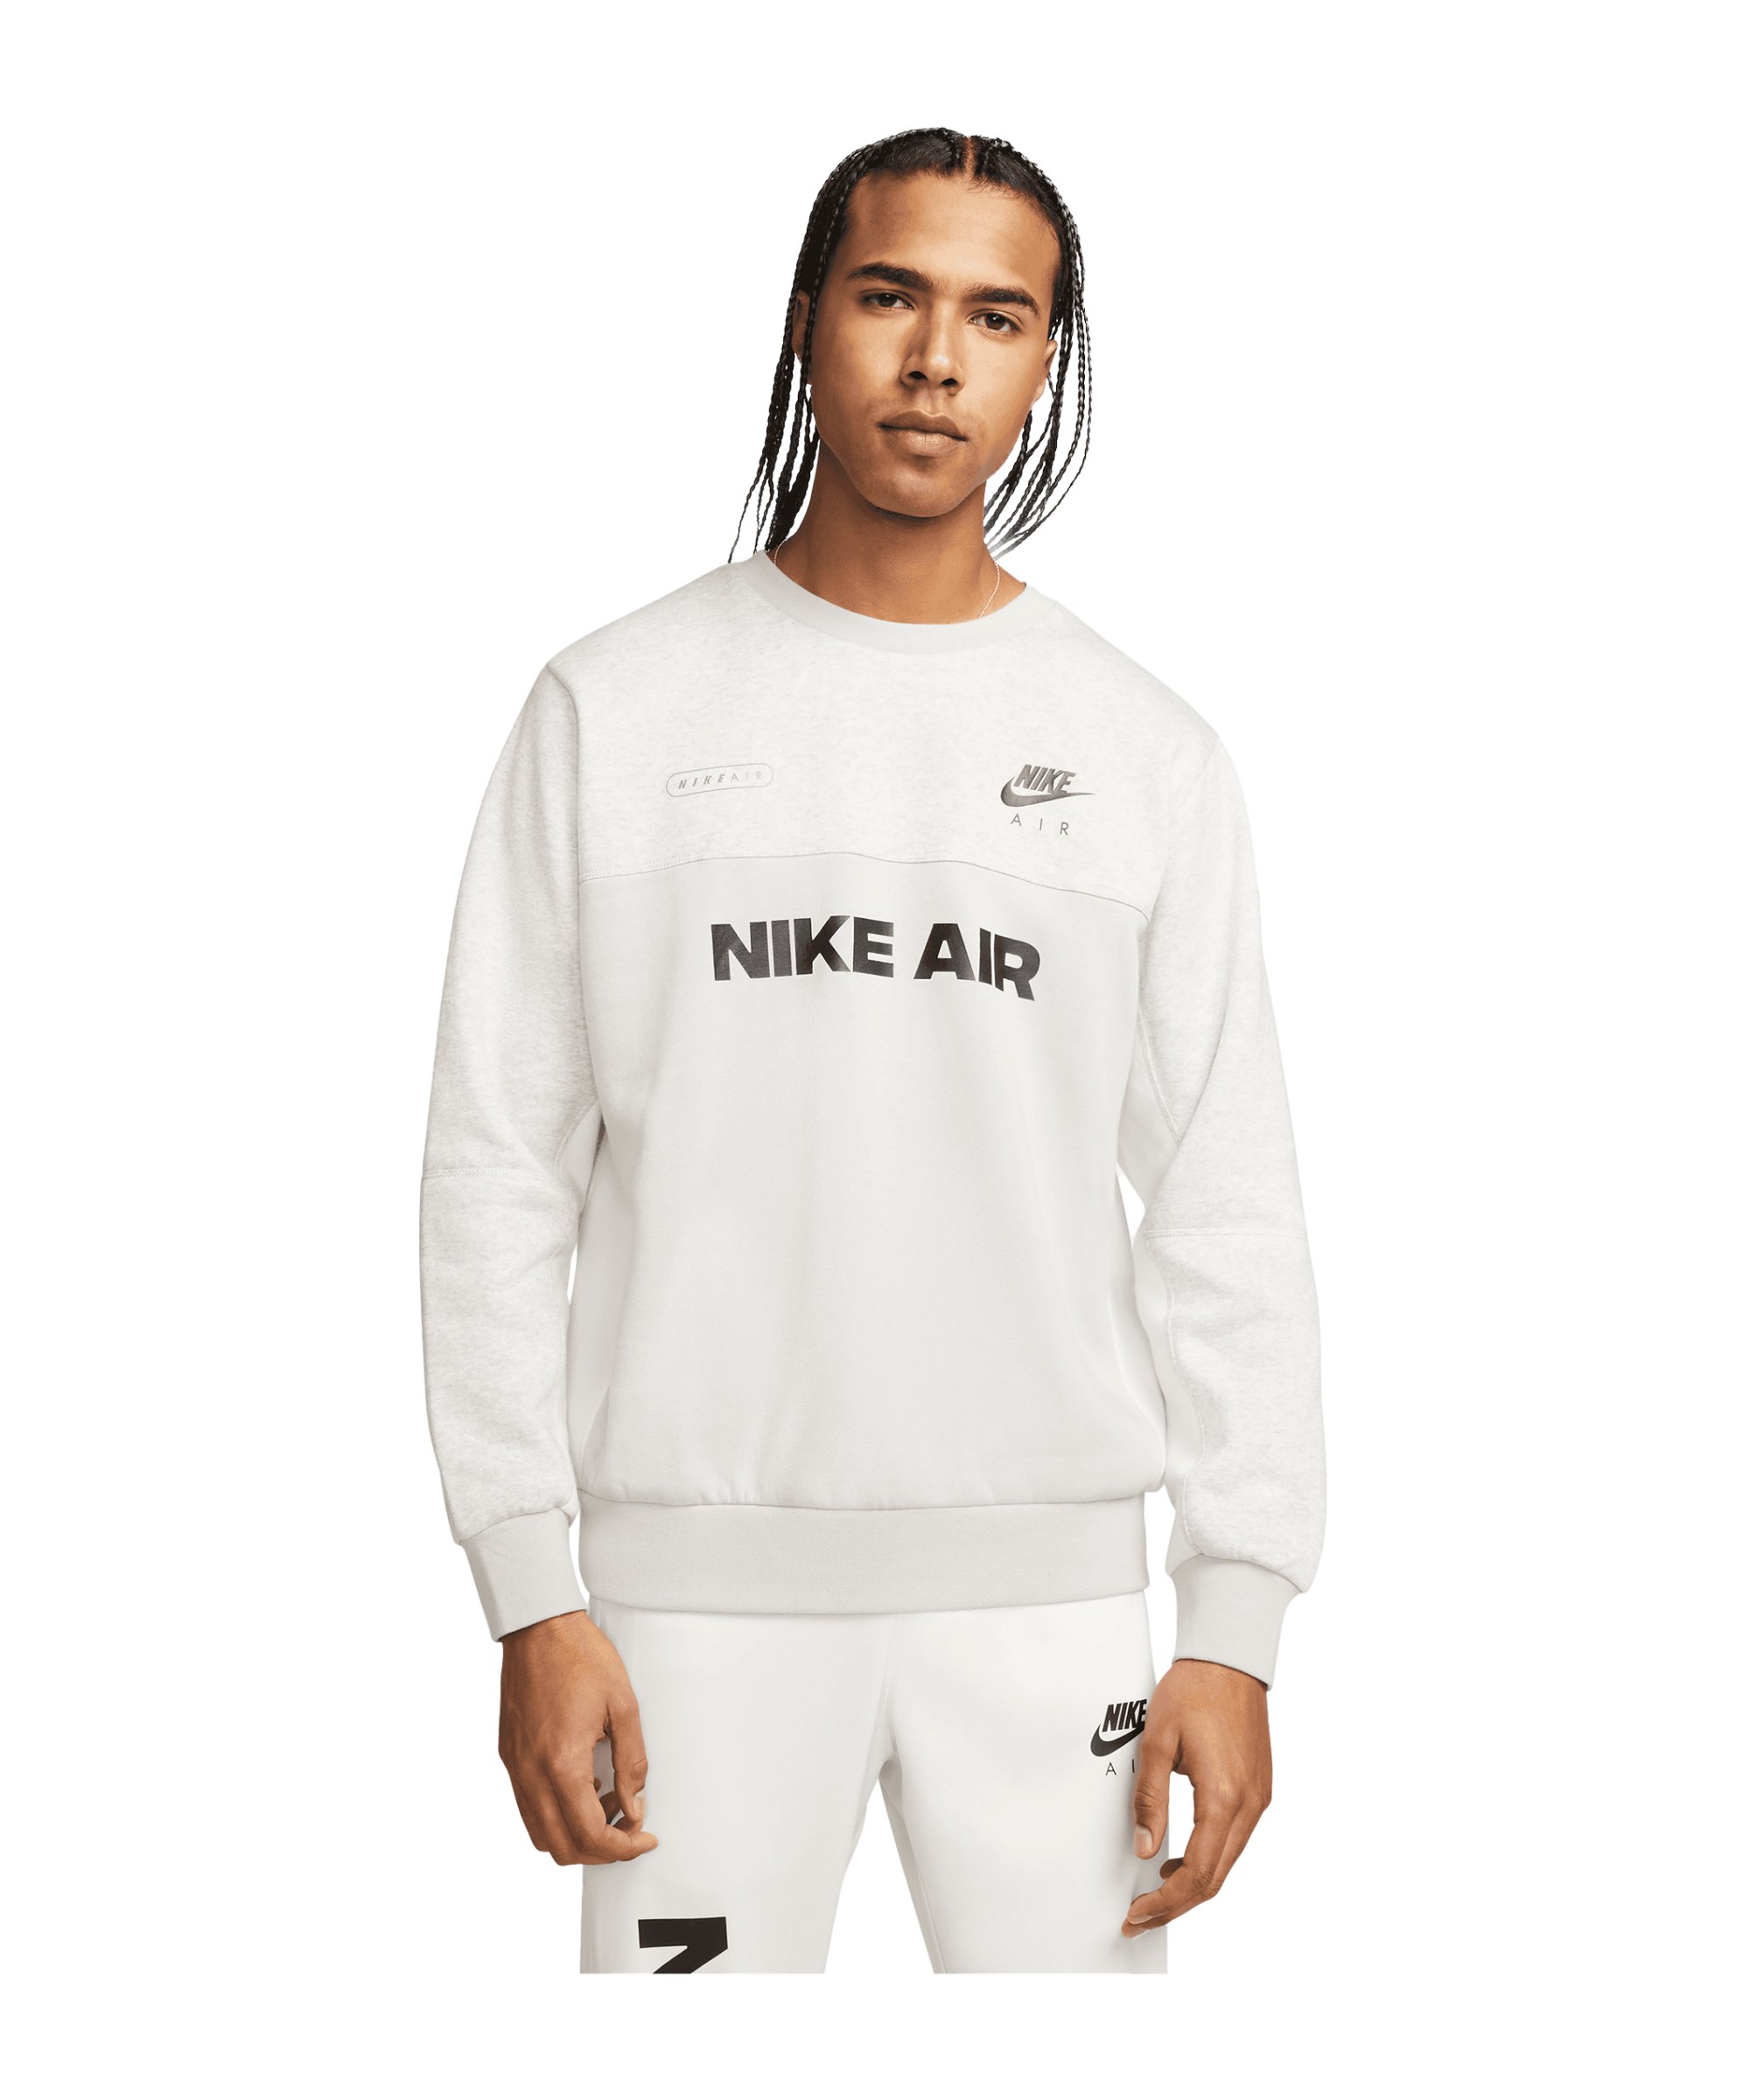 Nike Air Brushed-Back Fleece Sweatshirt Grau F012 - grau